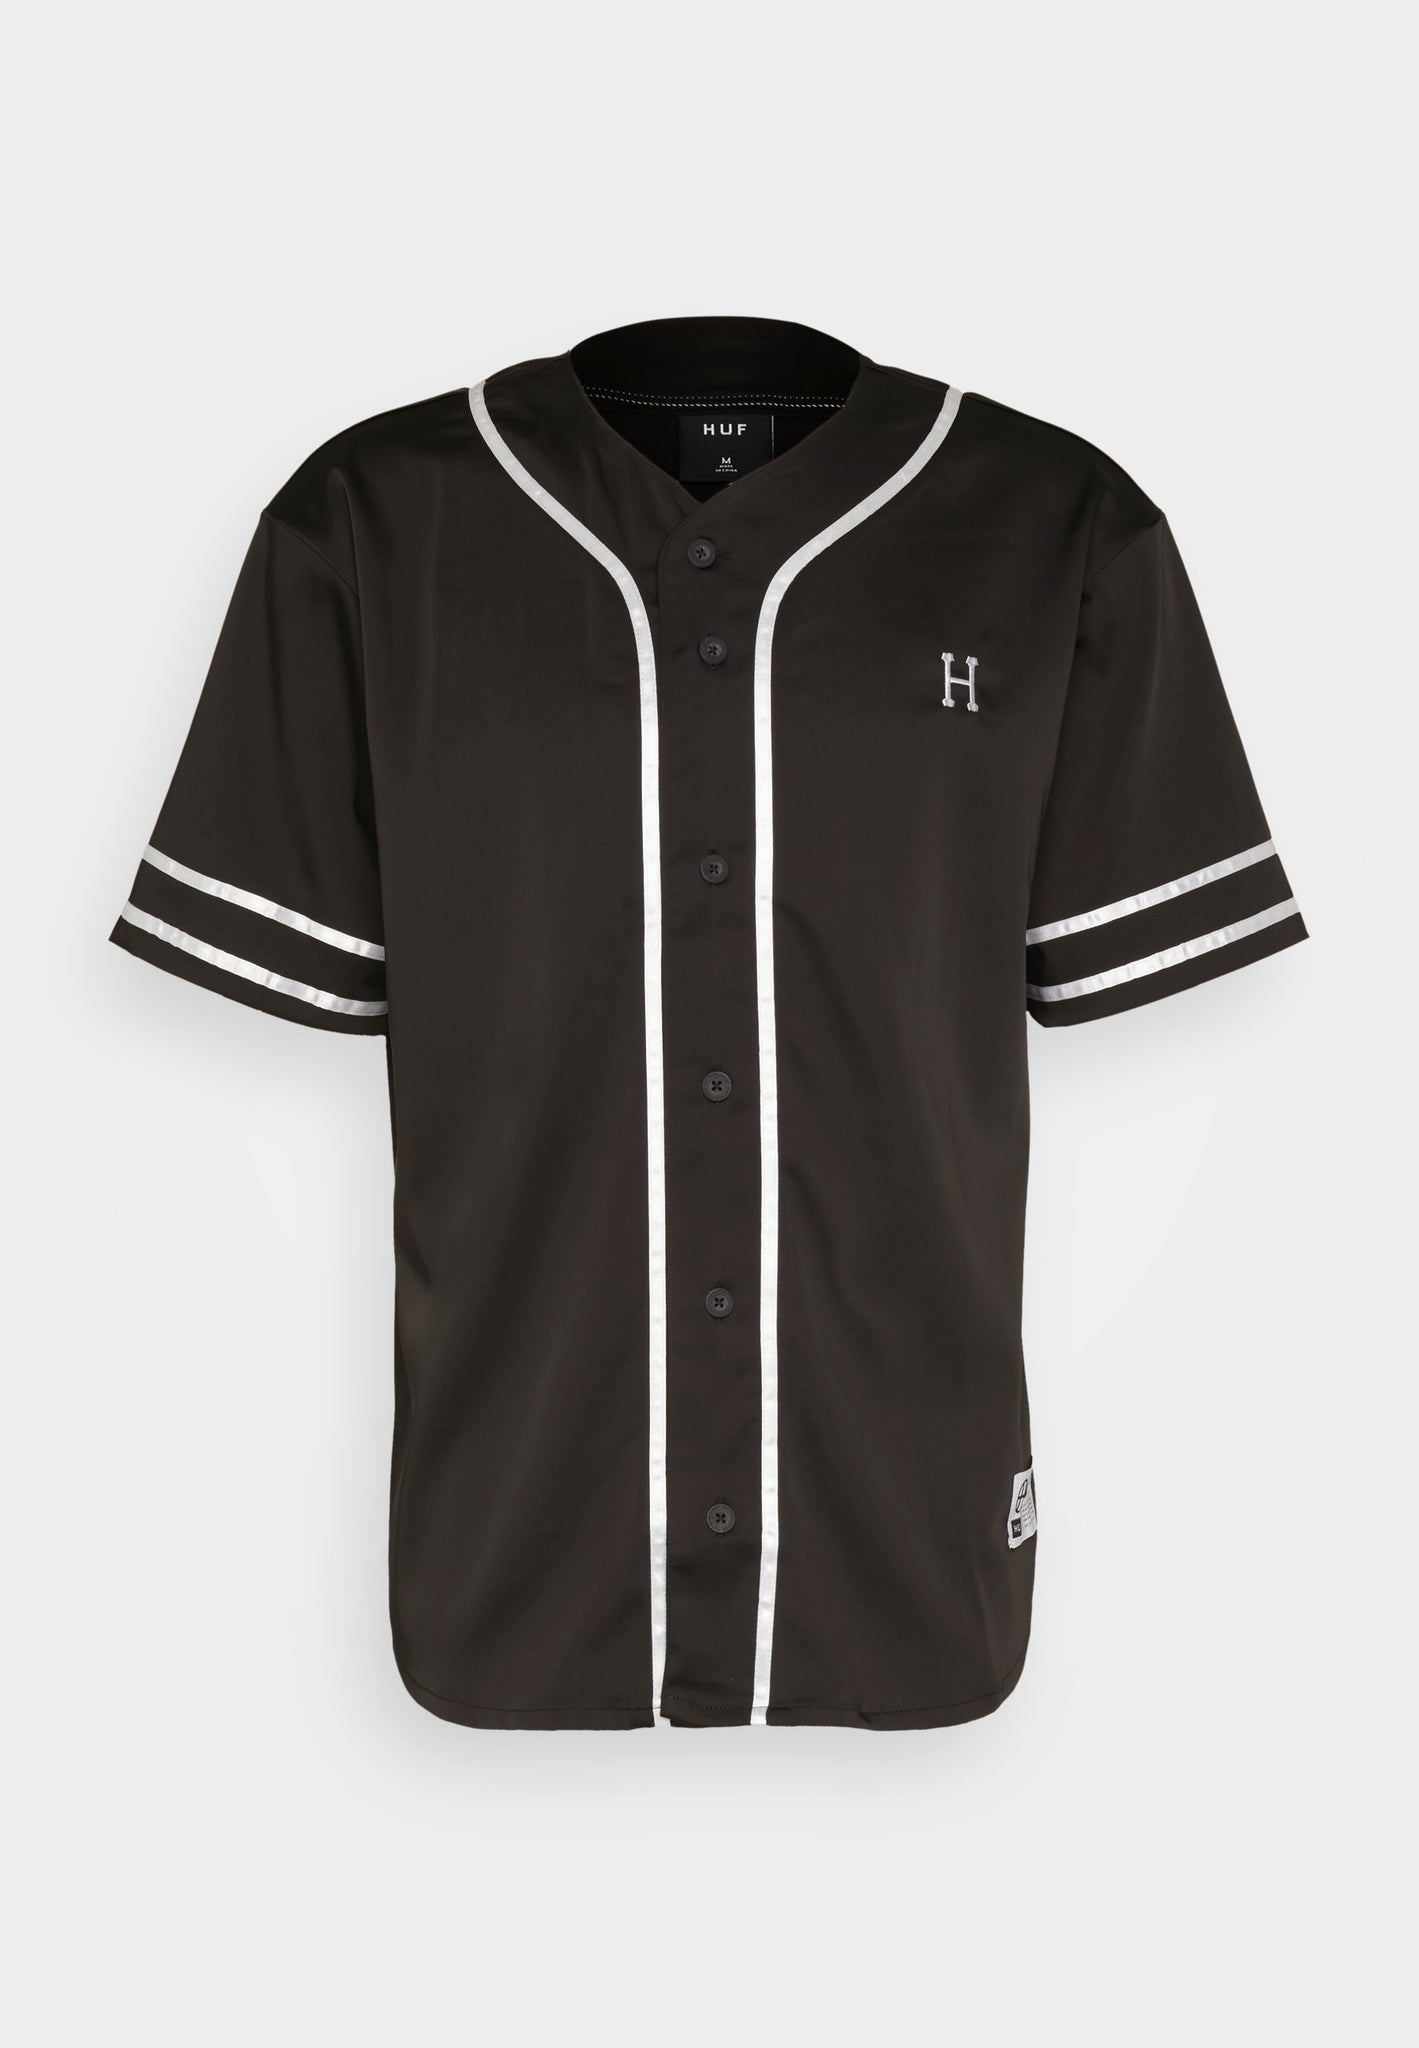 Communitty Hand Baseball Jersey (Black)